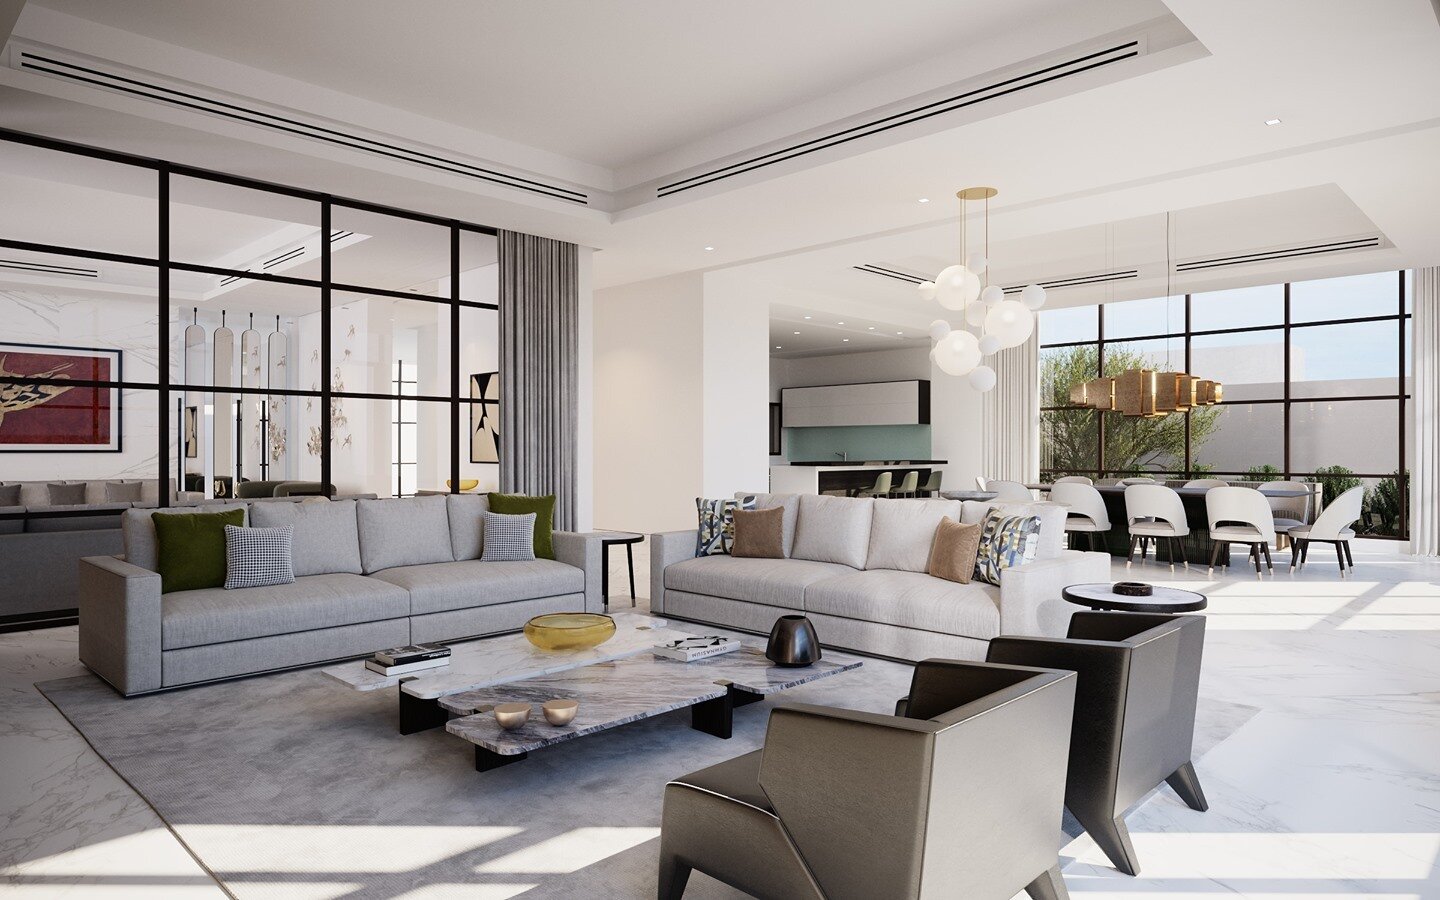 ⁠
Saddyiat Villa ⁠ - Living Room ⁠
⁠
Designers: VSHD ⁠
3D: @hassanjaberdesigns⁠
RENDERING INFO: 8 Perspectives 3000 pixels ⁠
PROGRAMS USED: 3d Max 2019, Corona, Photoshop. ⁠
⁠
⁠
⁠
➖➖➖➖➖➖➖➖➖➖➖➖➖⁠
 WWW.HASSANJABER.COM⁠
➖➖➖➖➖➖➖➖➖➖➖➖➖⁠
⁠
🔺Follow @hassan